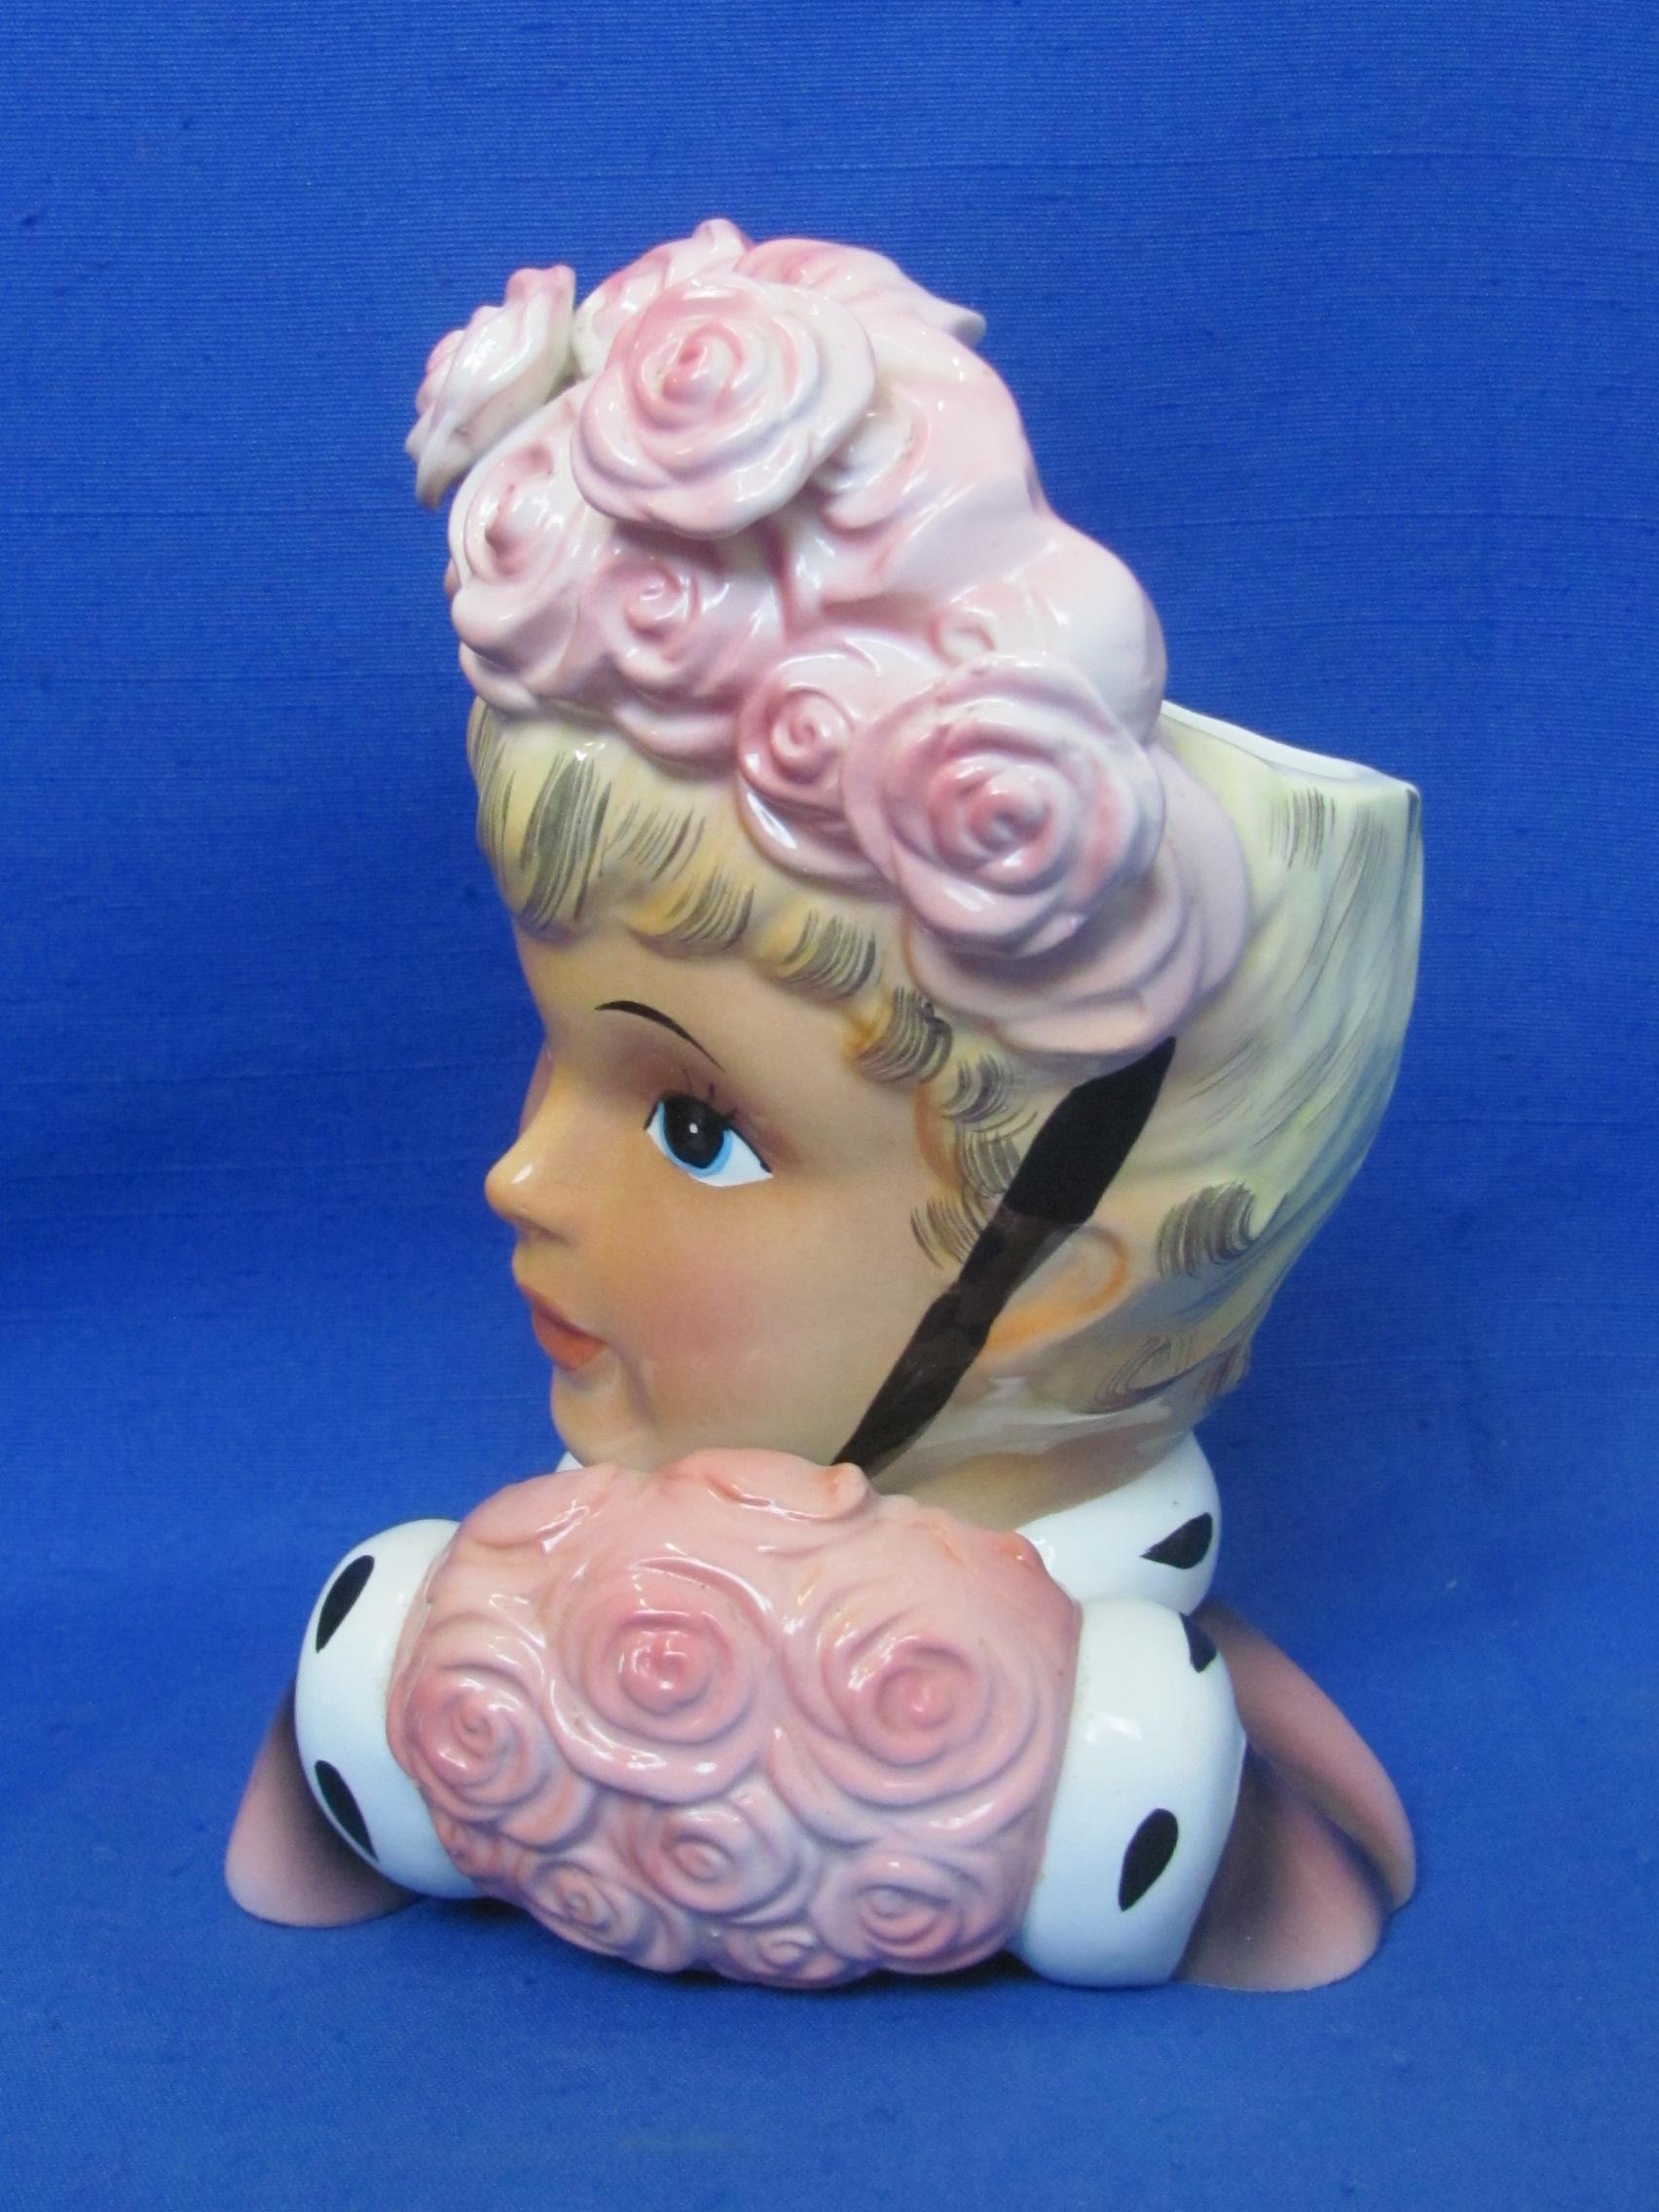 Vintage Enesco Lady Head Wall Pocket – Pink Rose Muff & Hat – 6” tall